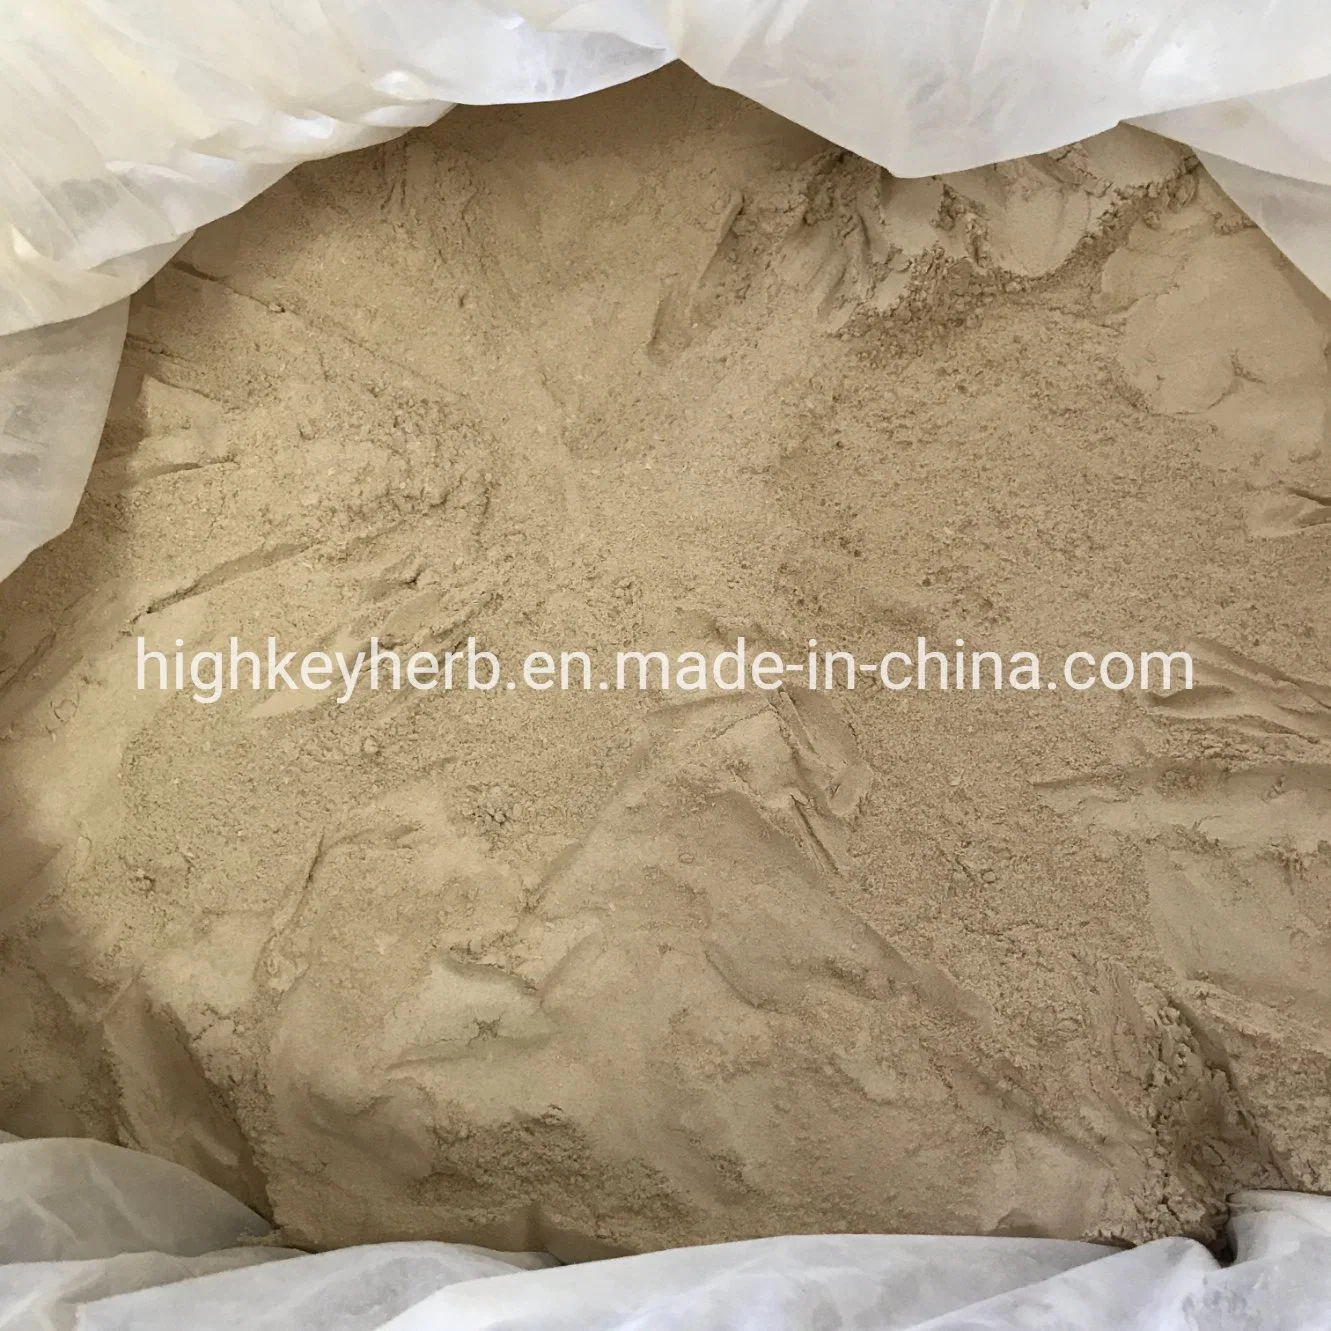 Xiang Gu Fen Wholesale/Supplier Bulk Lentinus Edodes Extract Organic Shiitake Mushrooms Powder